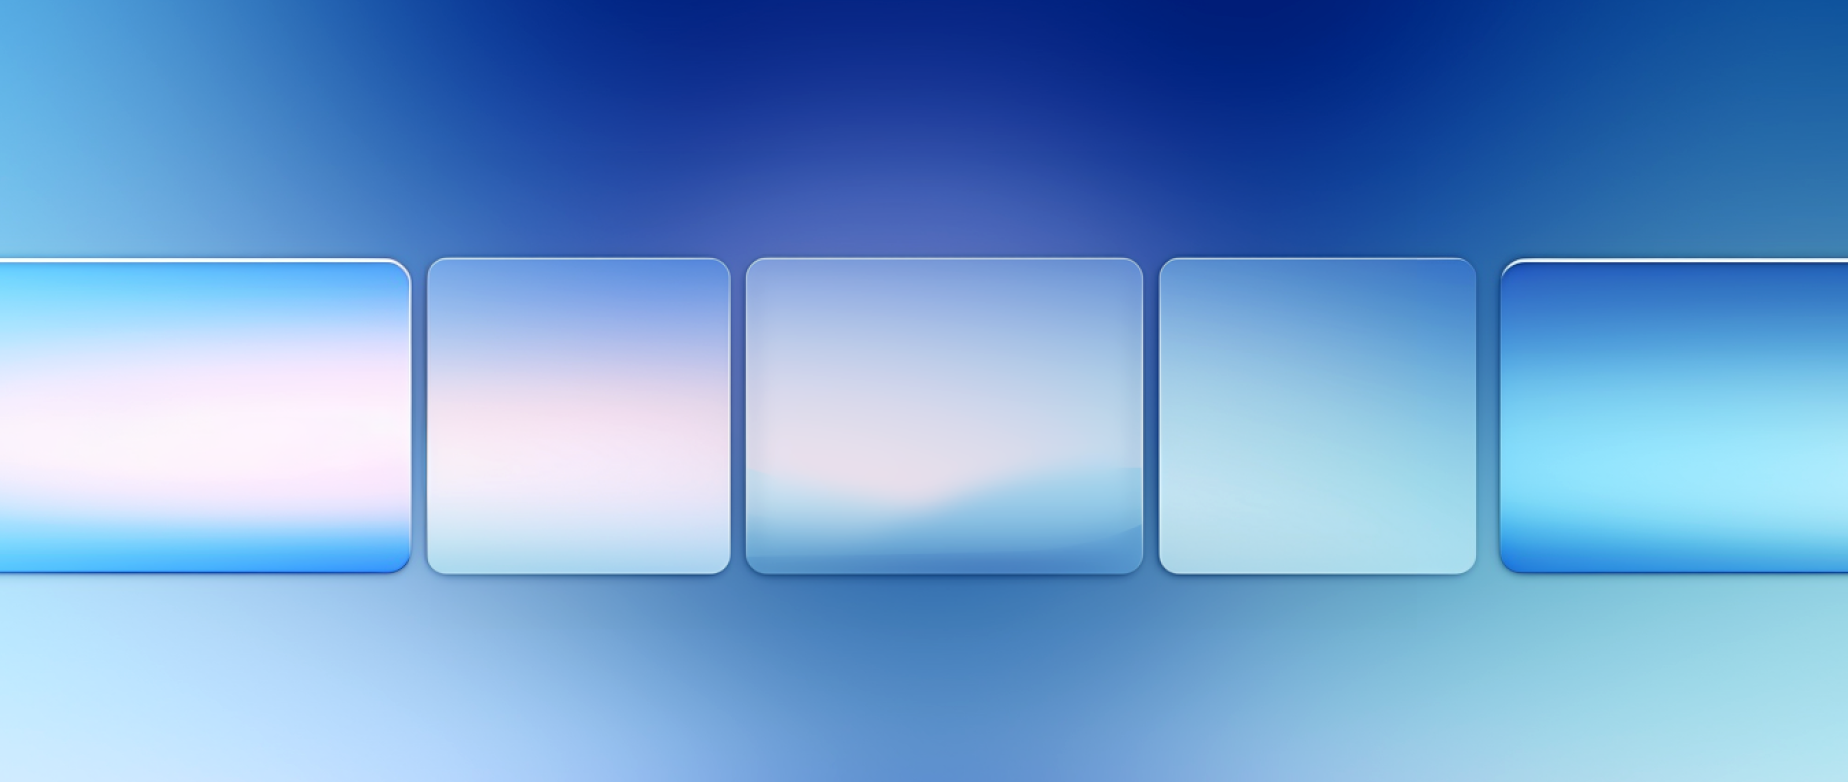 image of blue squares representing facebook ad templates